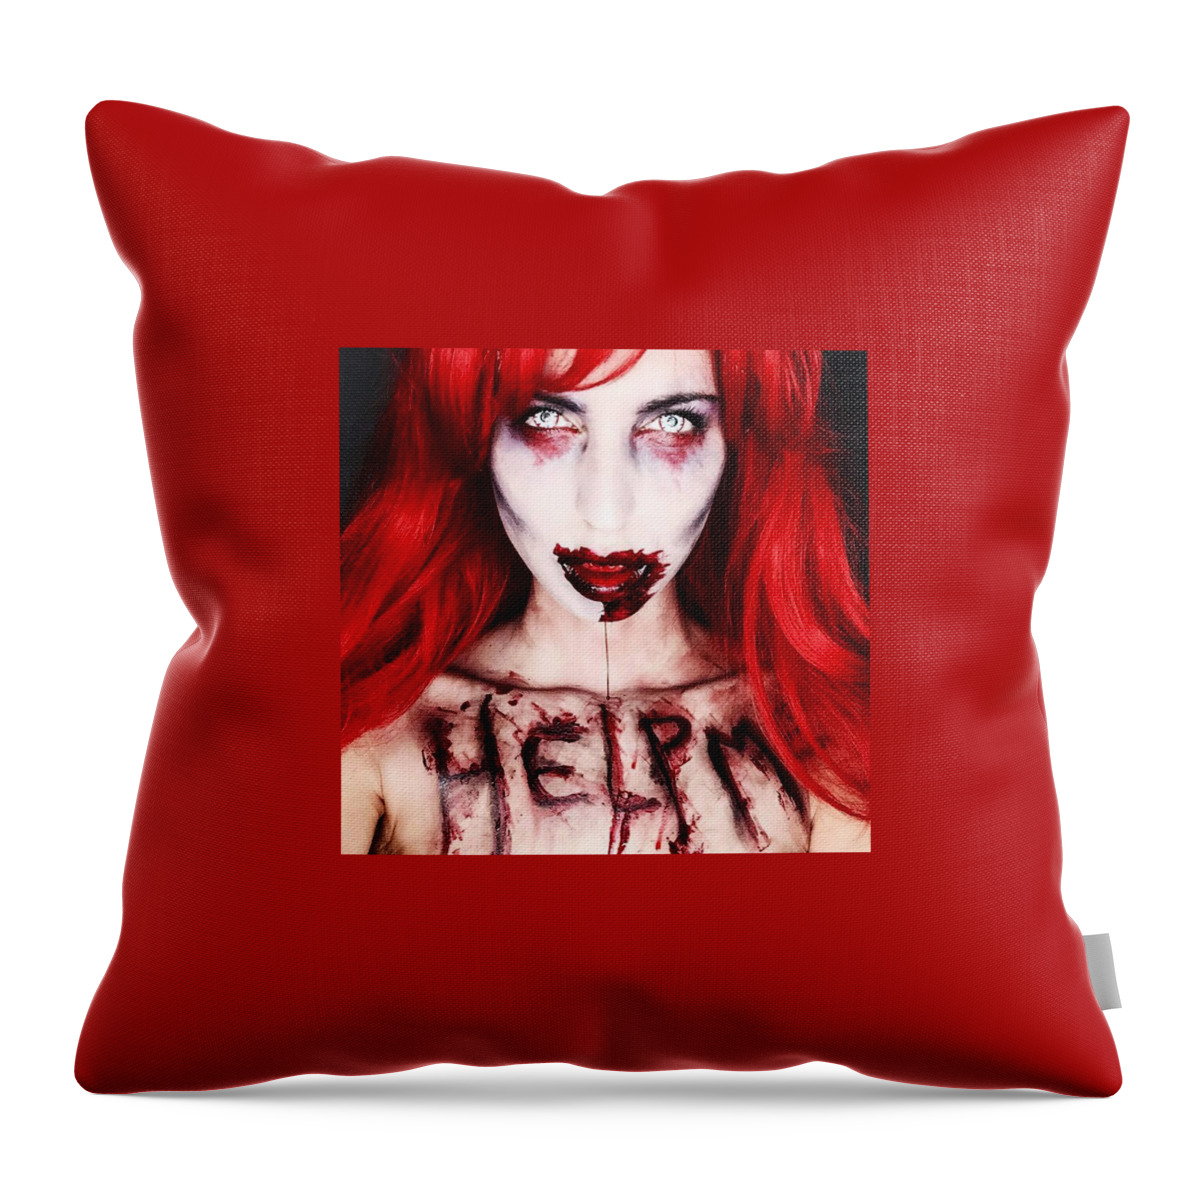 Beautymakeup Throw Pillow featuring the photograph Glam Zombie by S U S A N N G R A S S O W